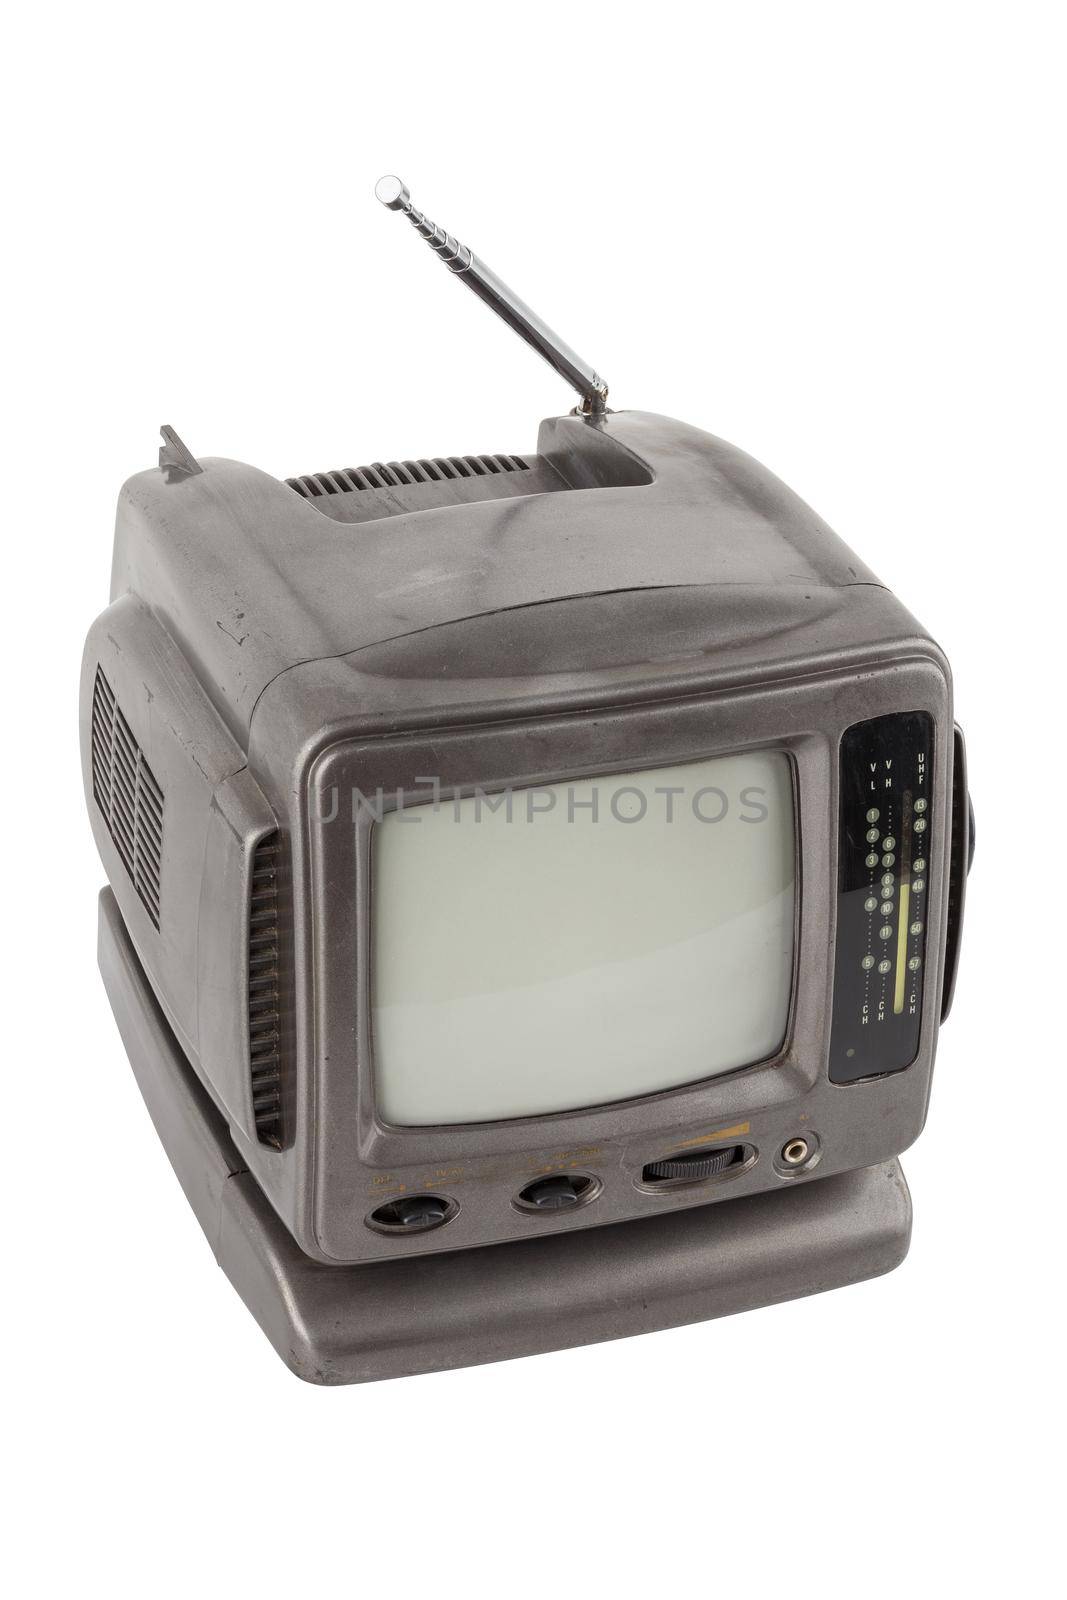 old used 5.5 inch protable analog crt tv unit isolated on white background